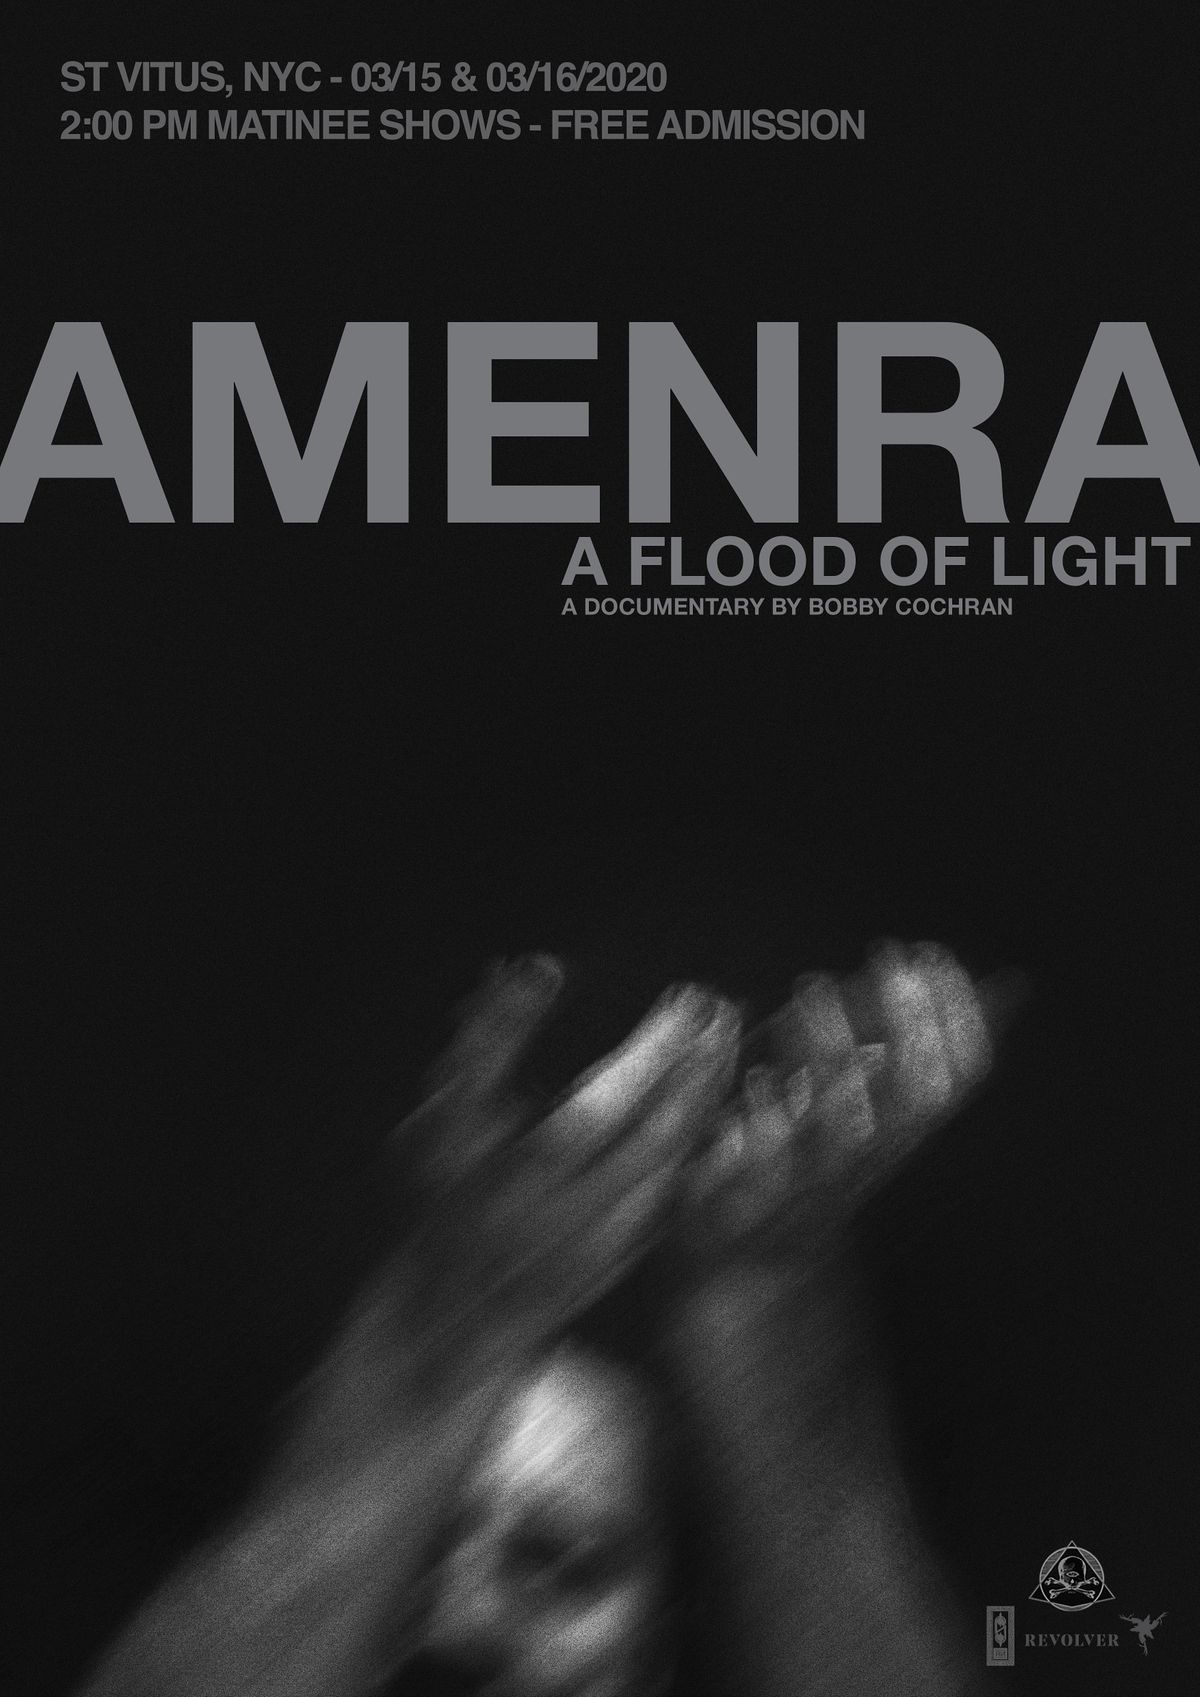 Amenra: A Flood of Light Documentary Screening